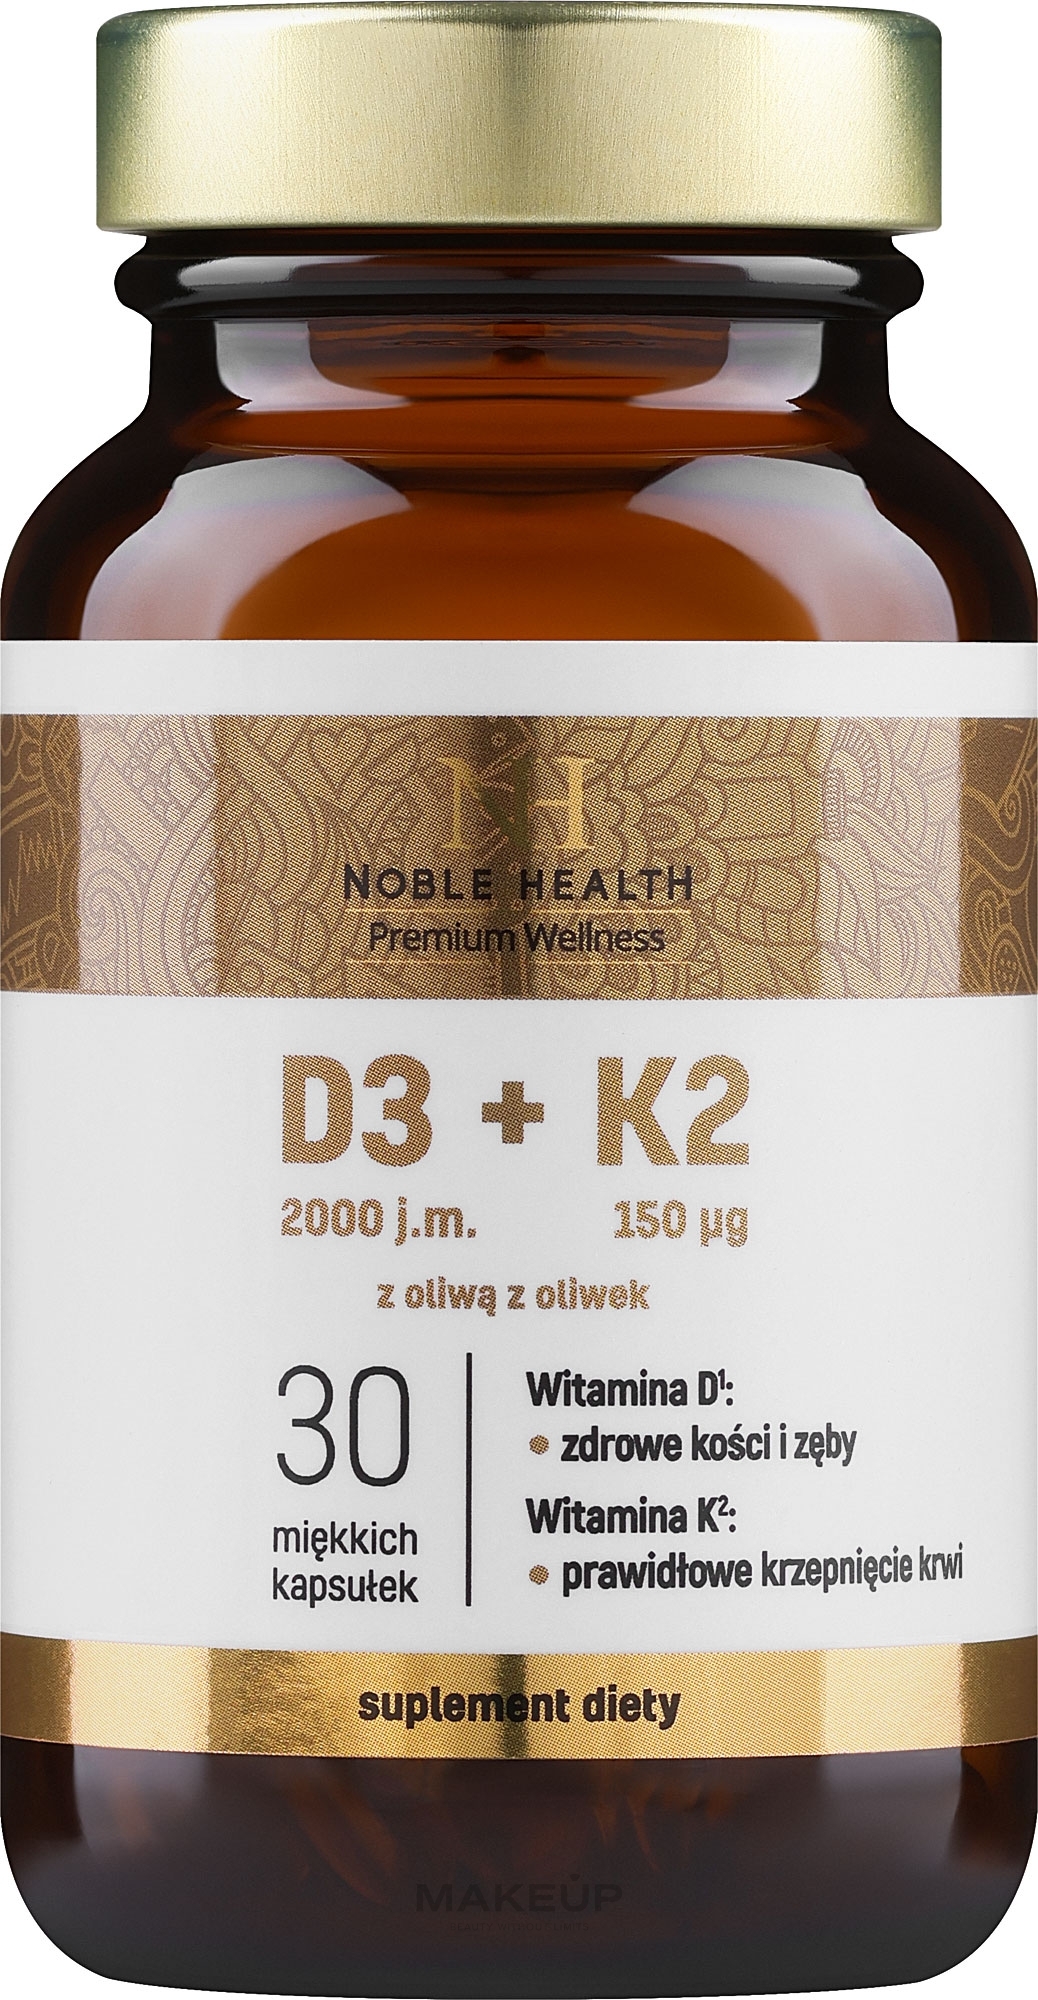 Suplement diety D3 + K2 z oliwą z oliwek extra virgin - Noble Health D3 + K2 In Olive Oil — Zdjęcie 30 szt.